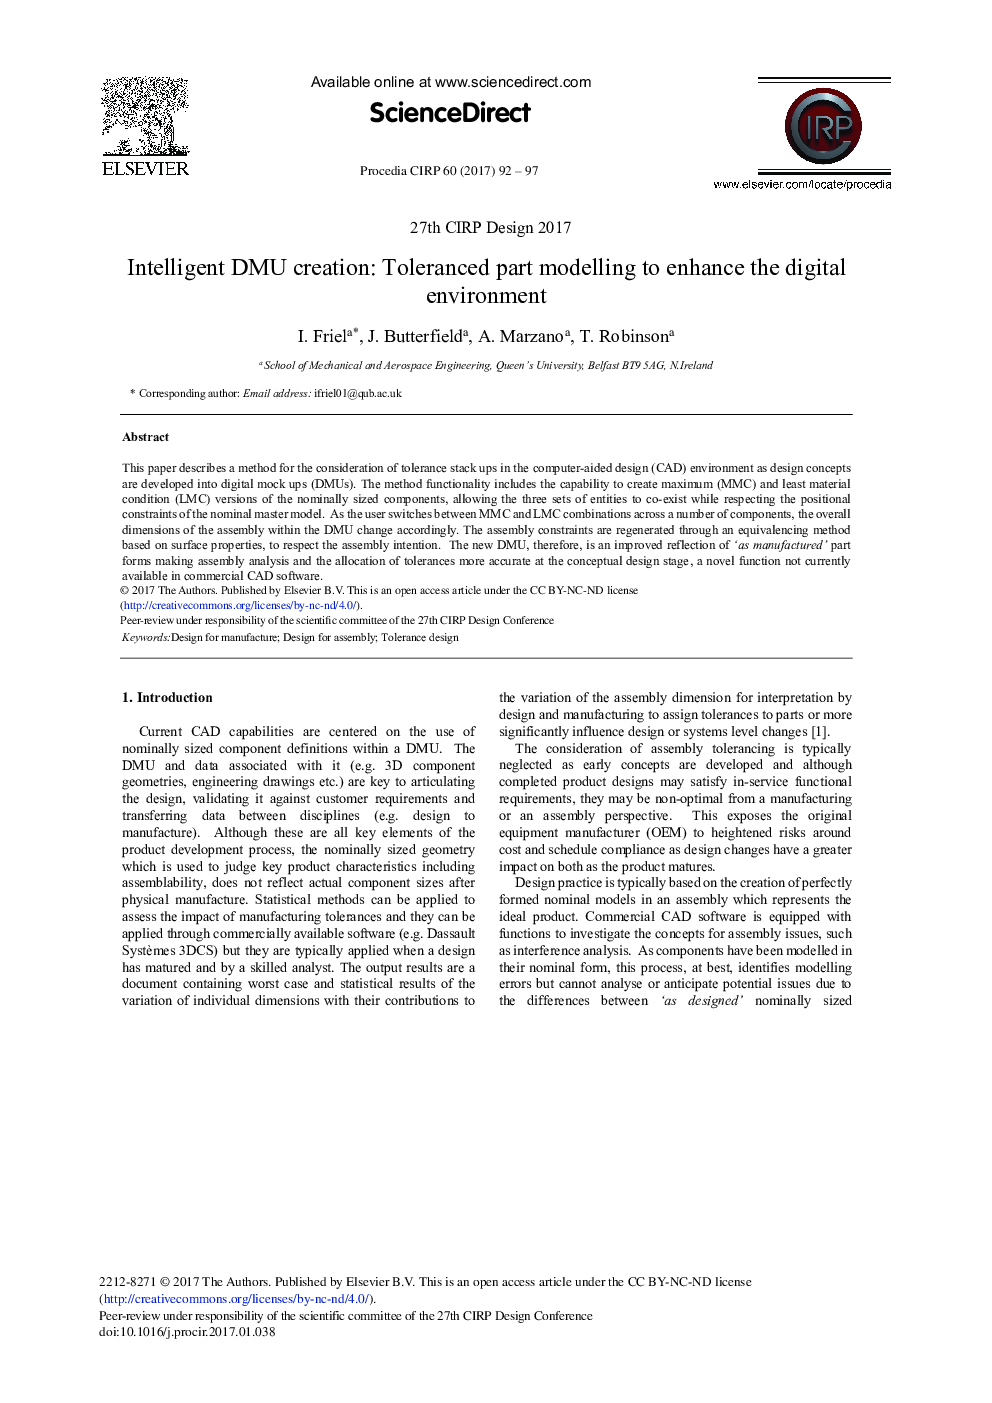 Intelligent DMU Creation: Toleranced Part Modelling to Enhance the Digital Environment